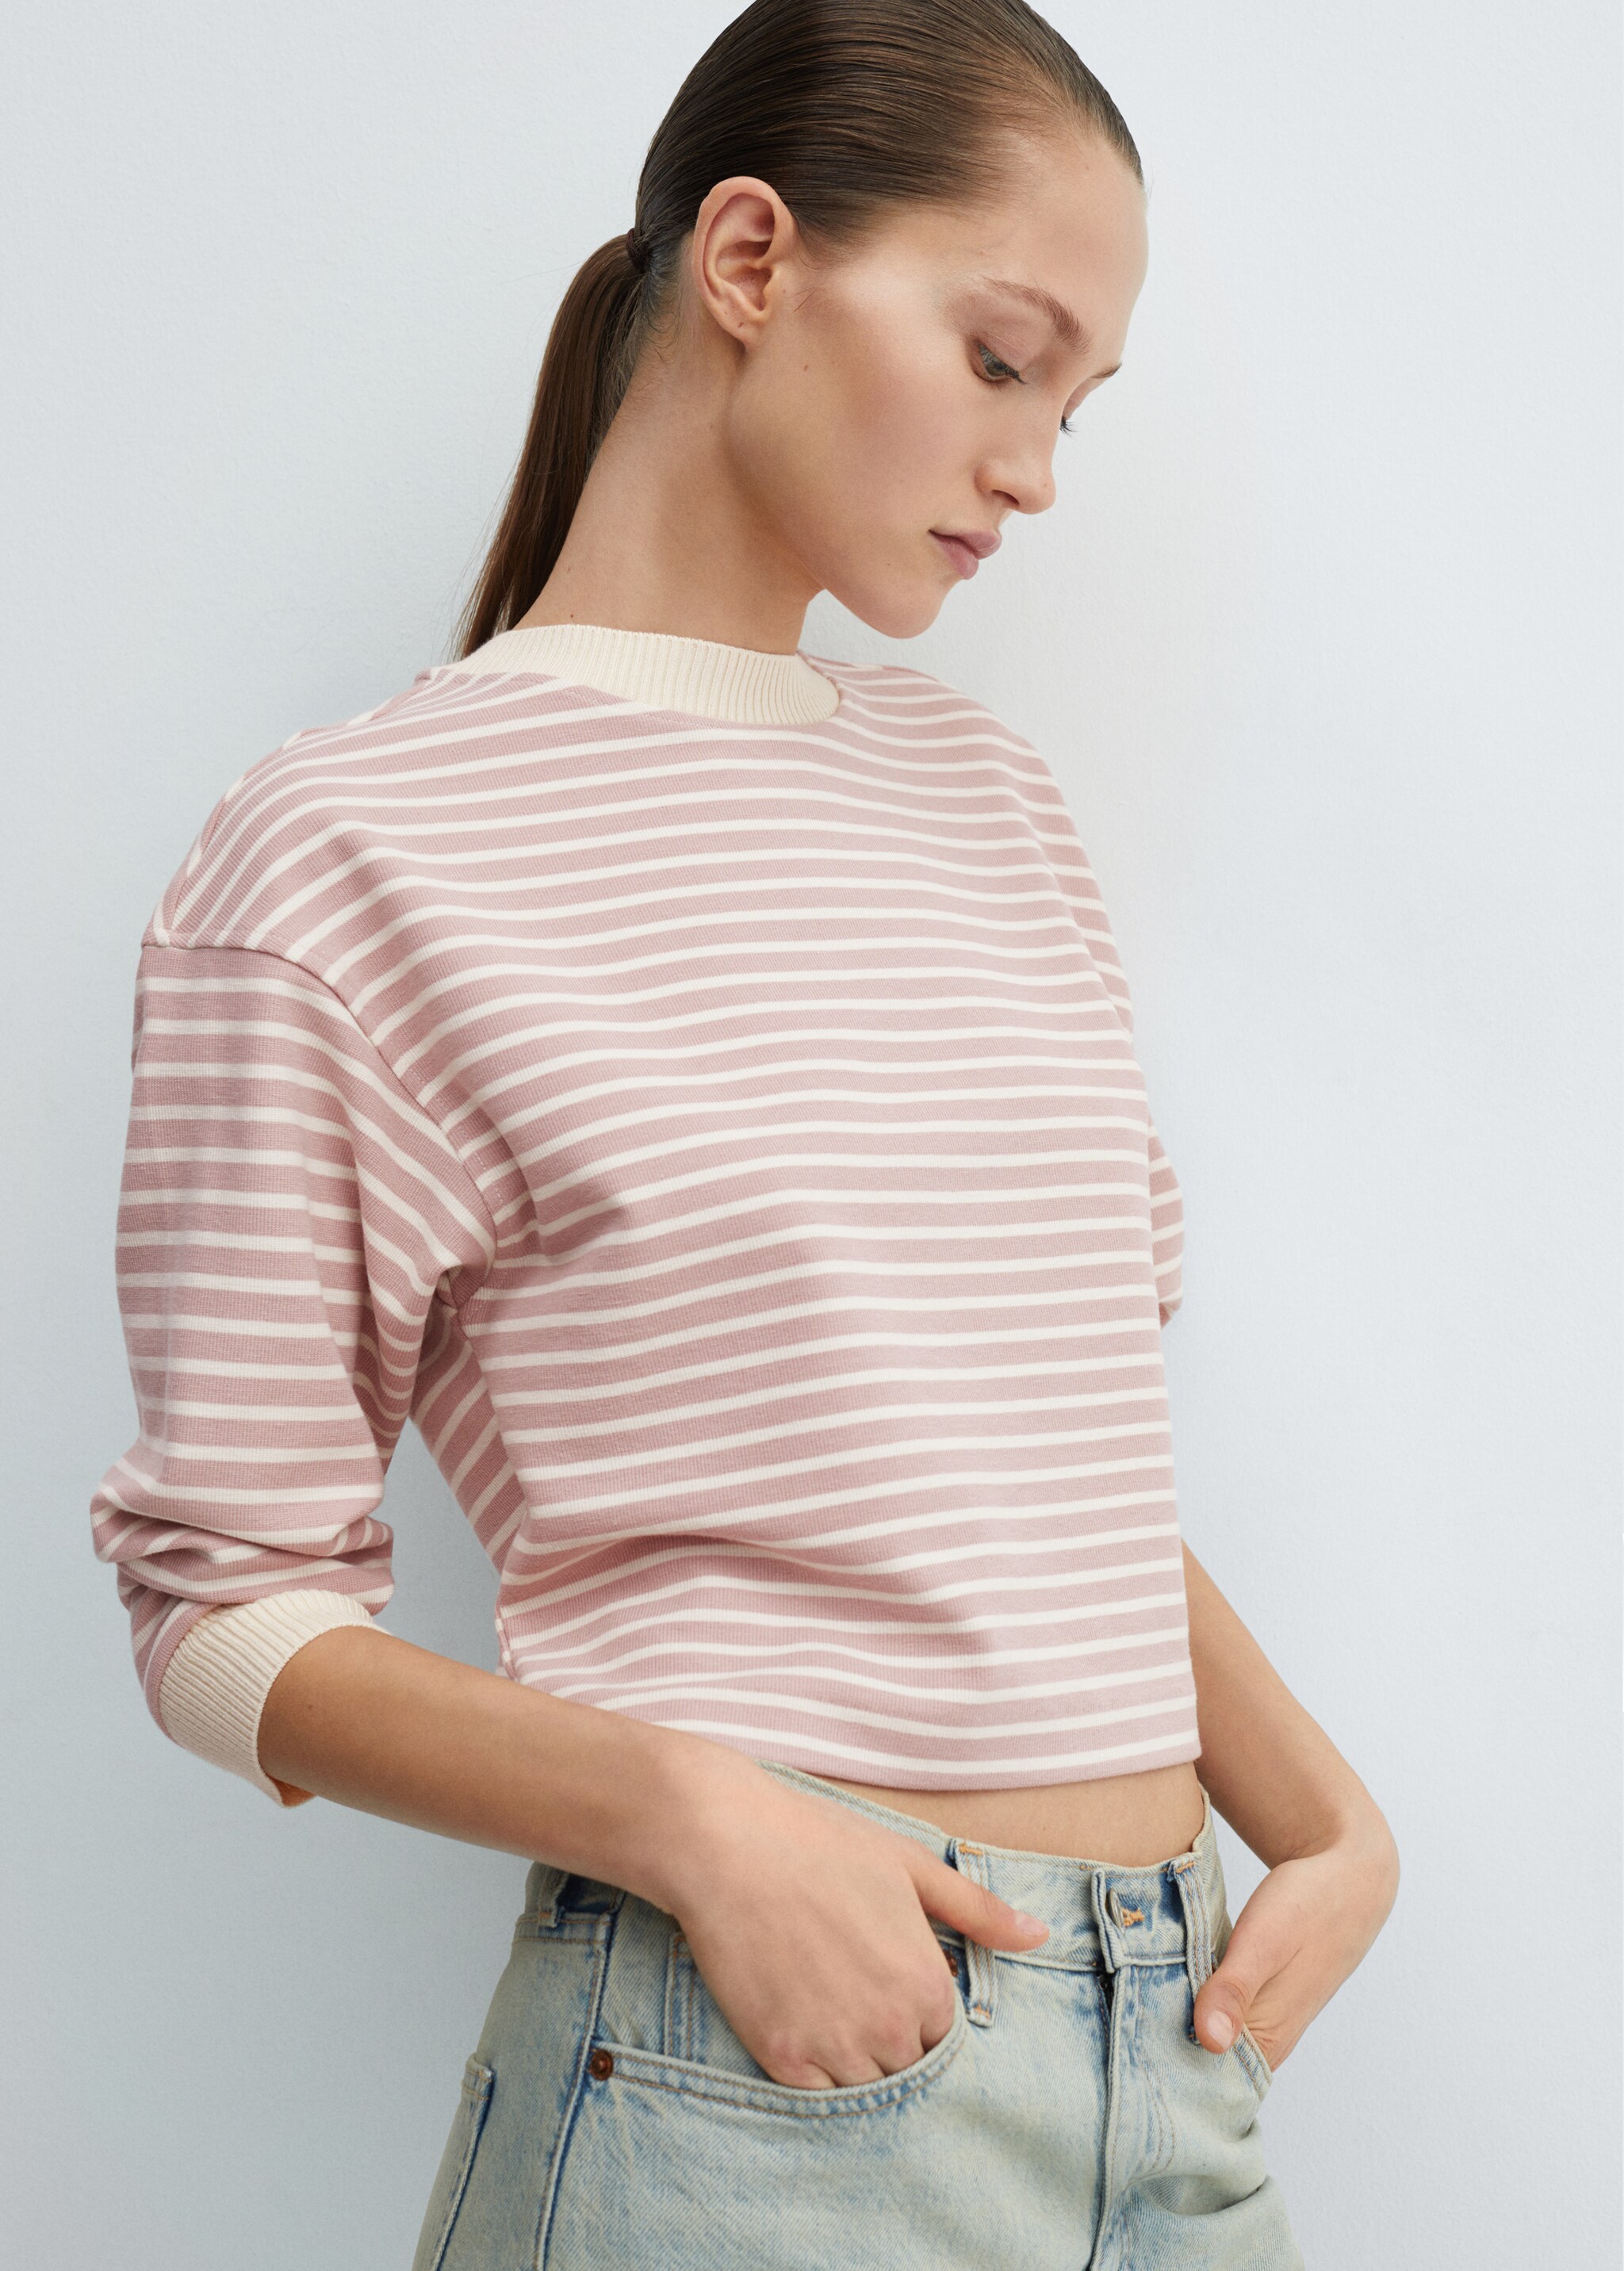 Striped knitted sweatshirt - Medium plane